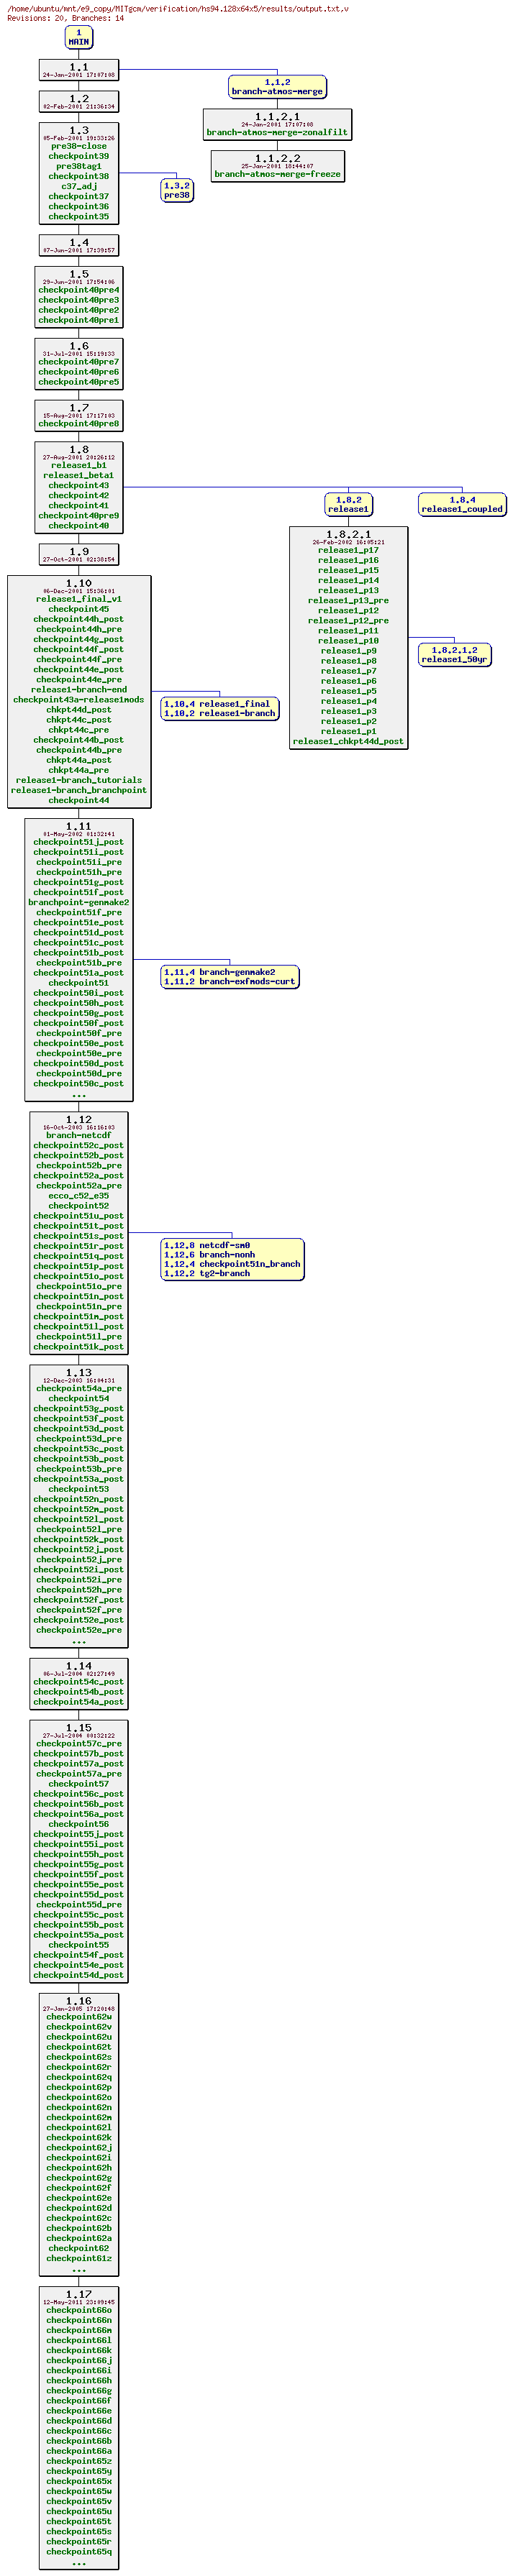 Revisions of MITgcm/verification/hs94.128x64x5/results/output.txt